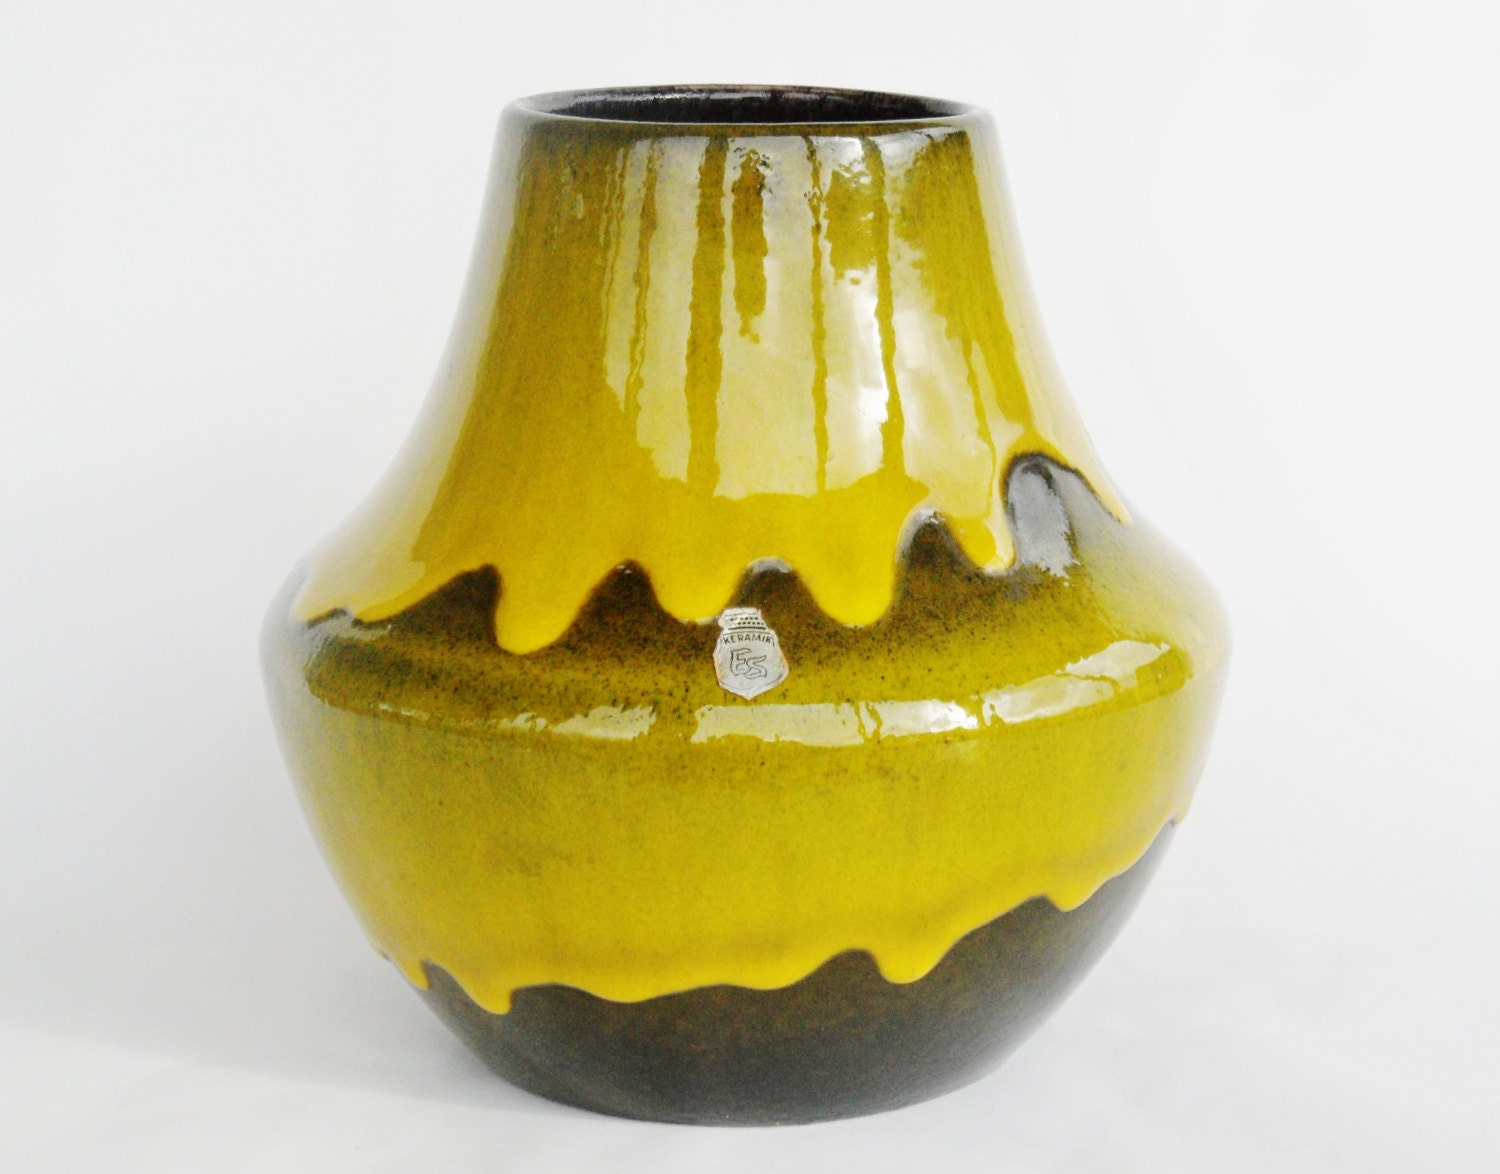 Stunning ES Keramik pottery vase drip glaze Fat Lava era west german retro vintage midcentury modern mellow yellow black label sixties UFO - Coollect